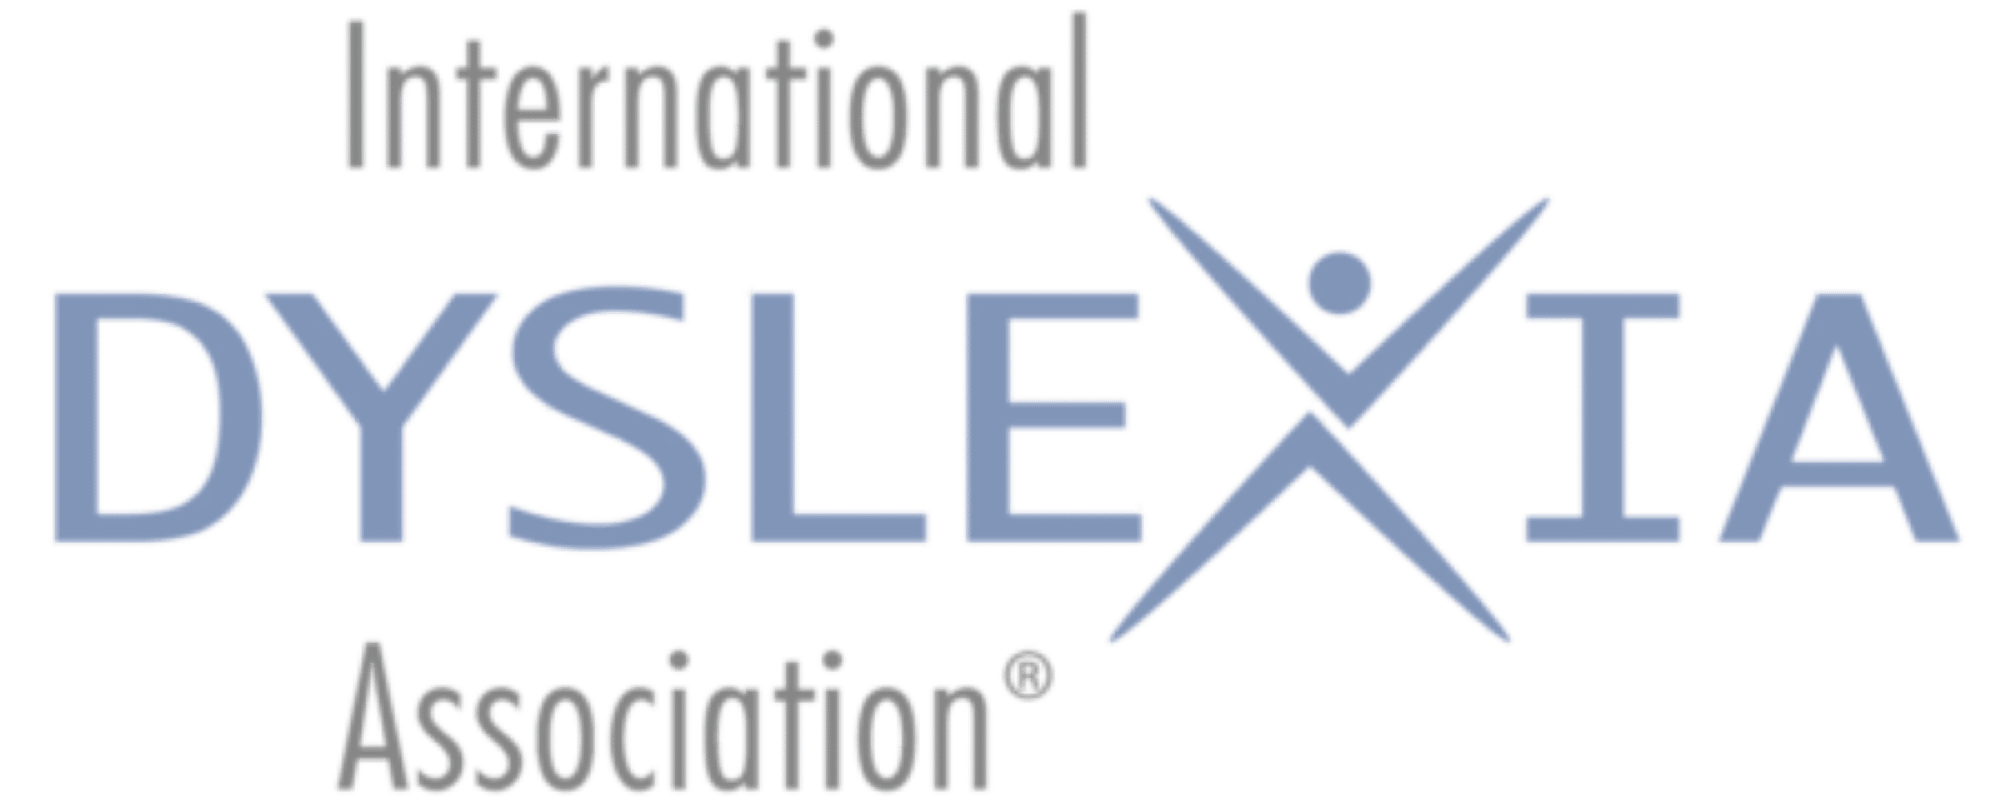 International Dyslexia Association conference 2021 LDRFA